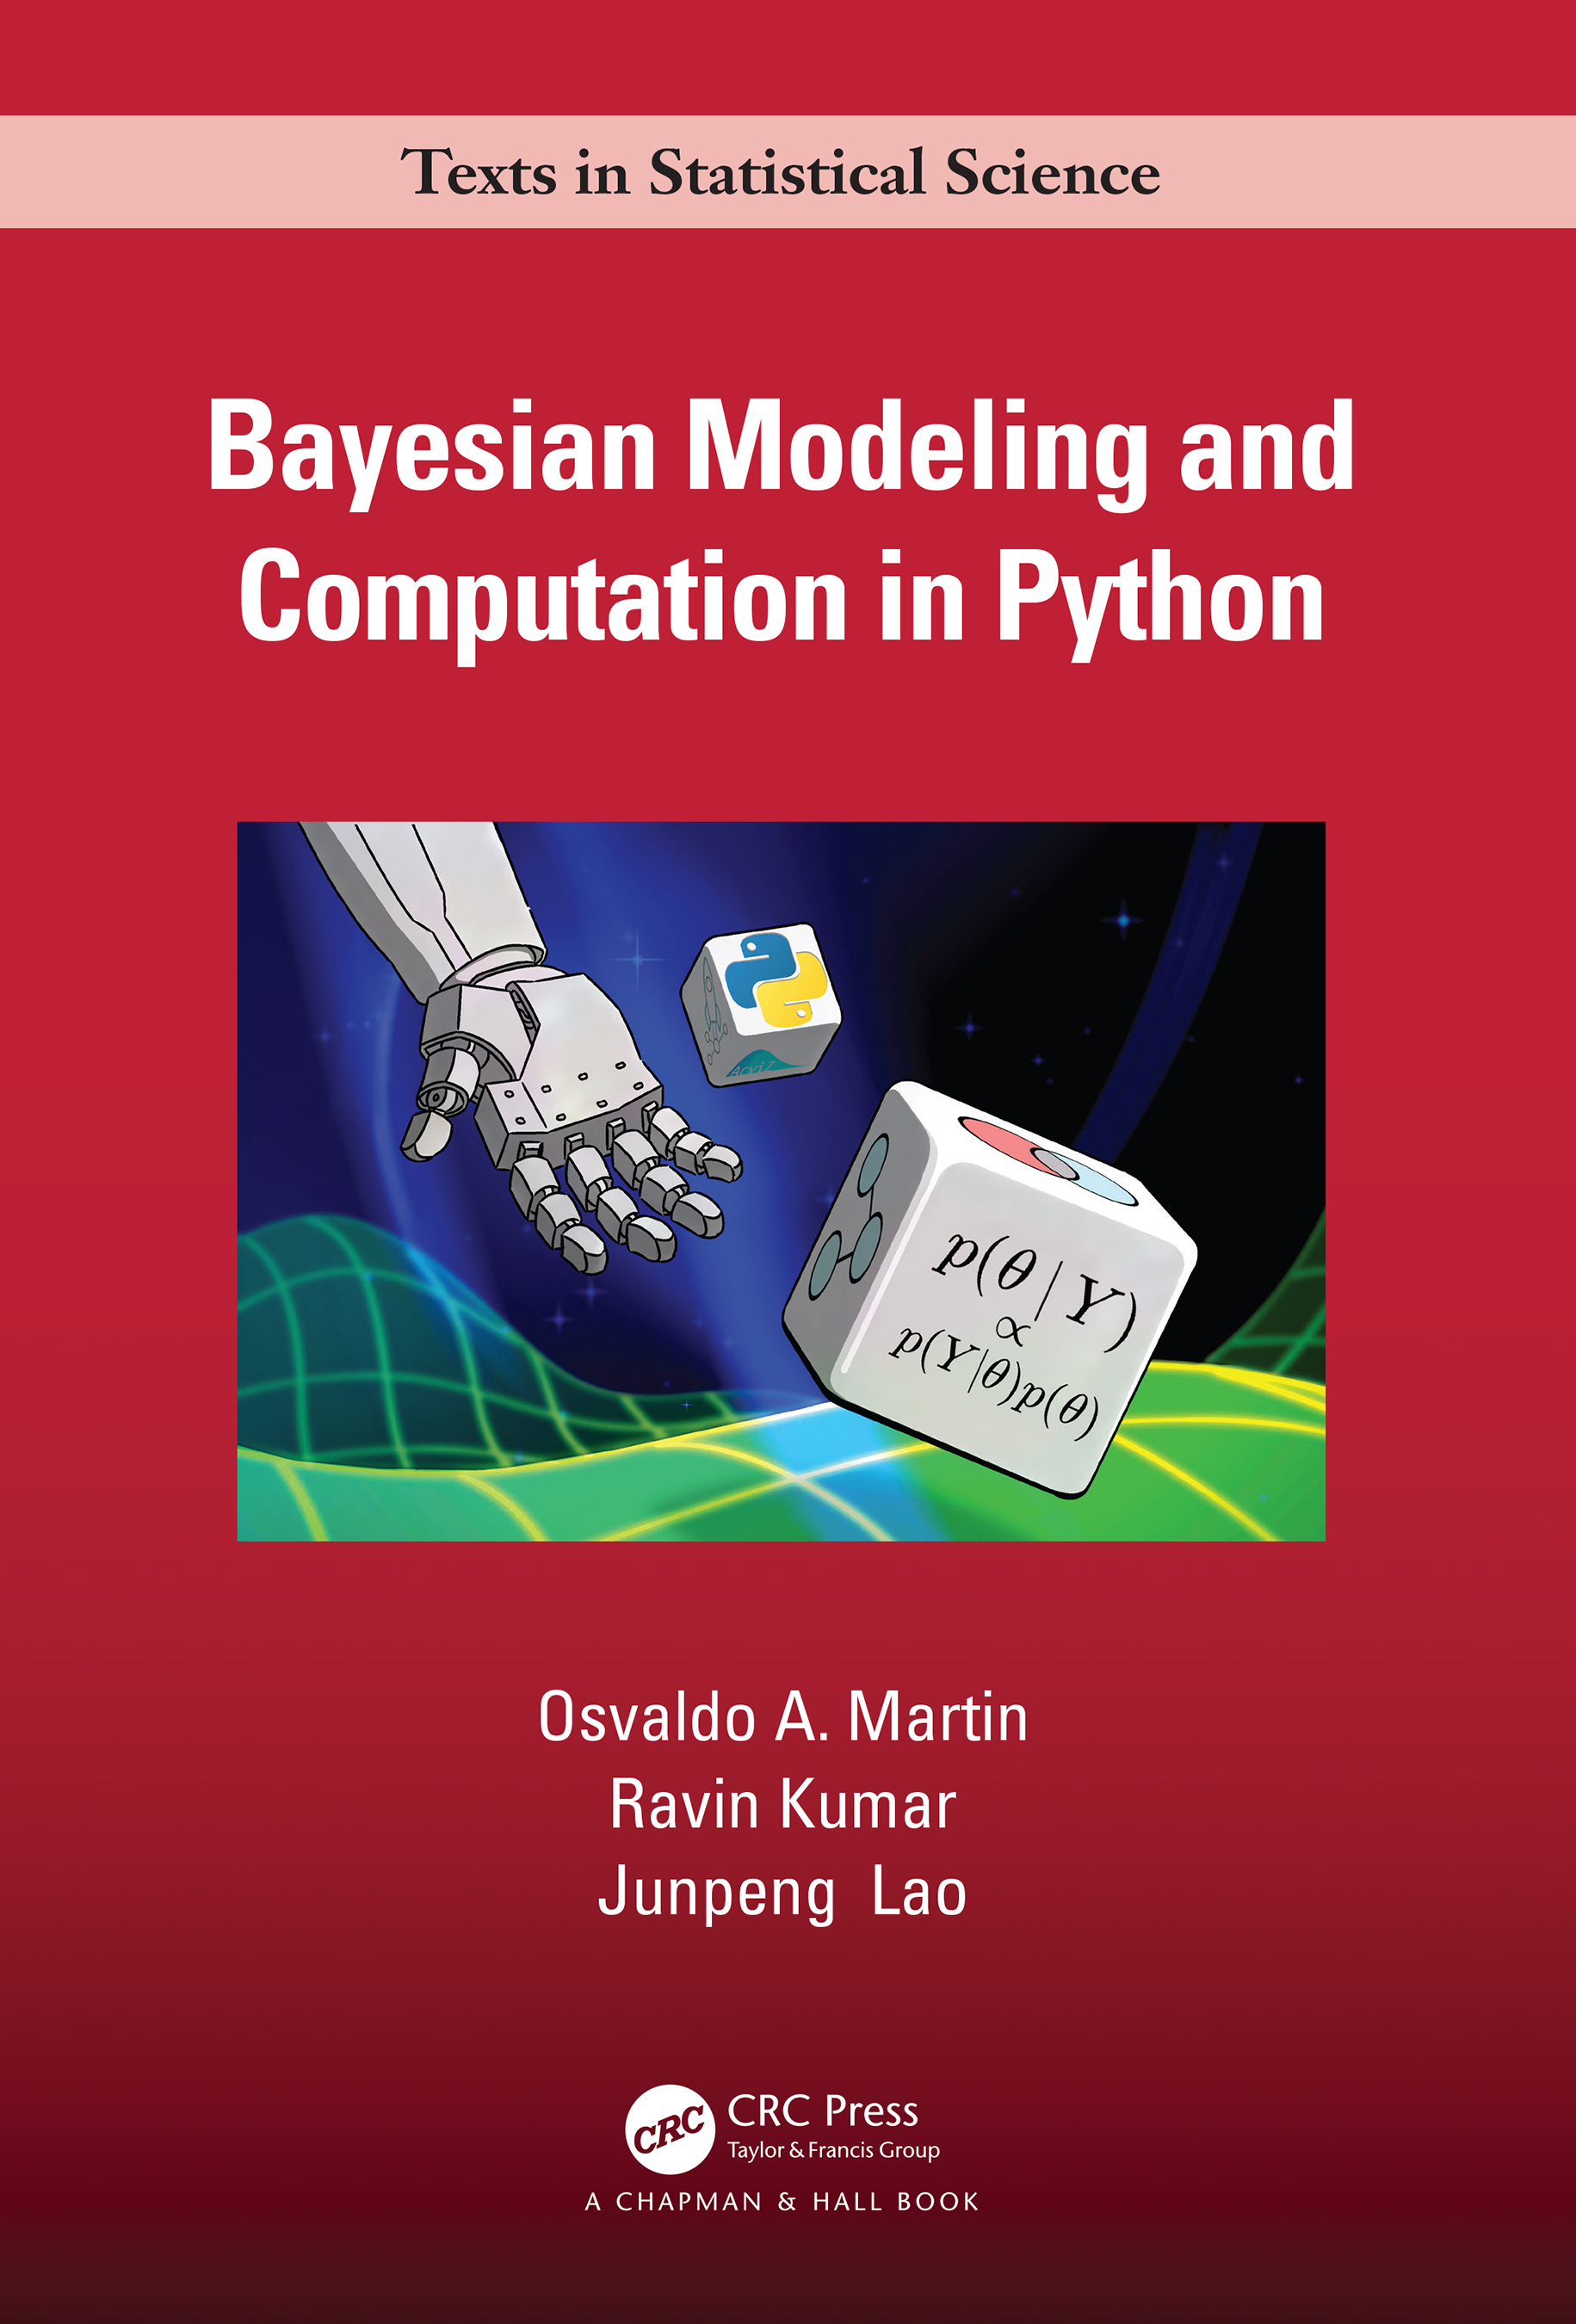 Bayesian modeling and computation